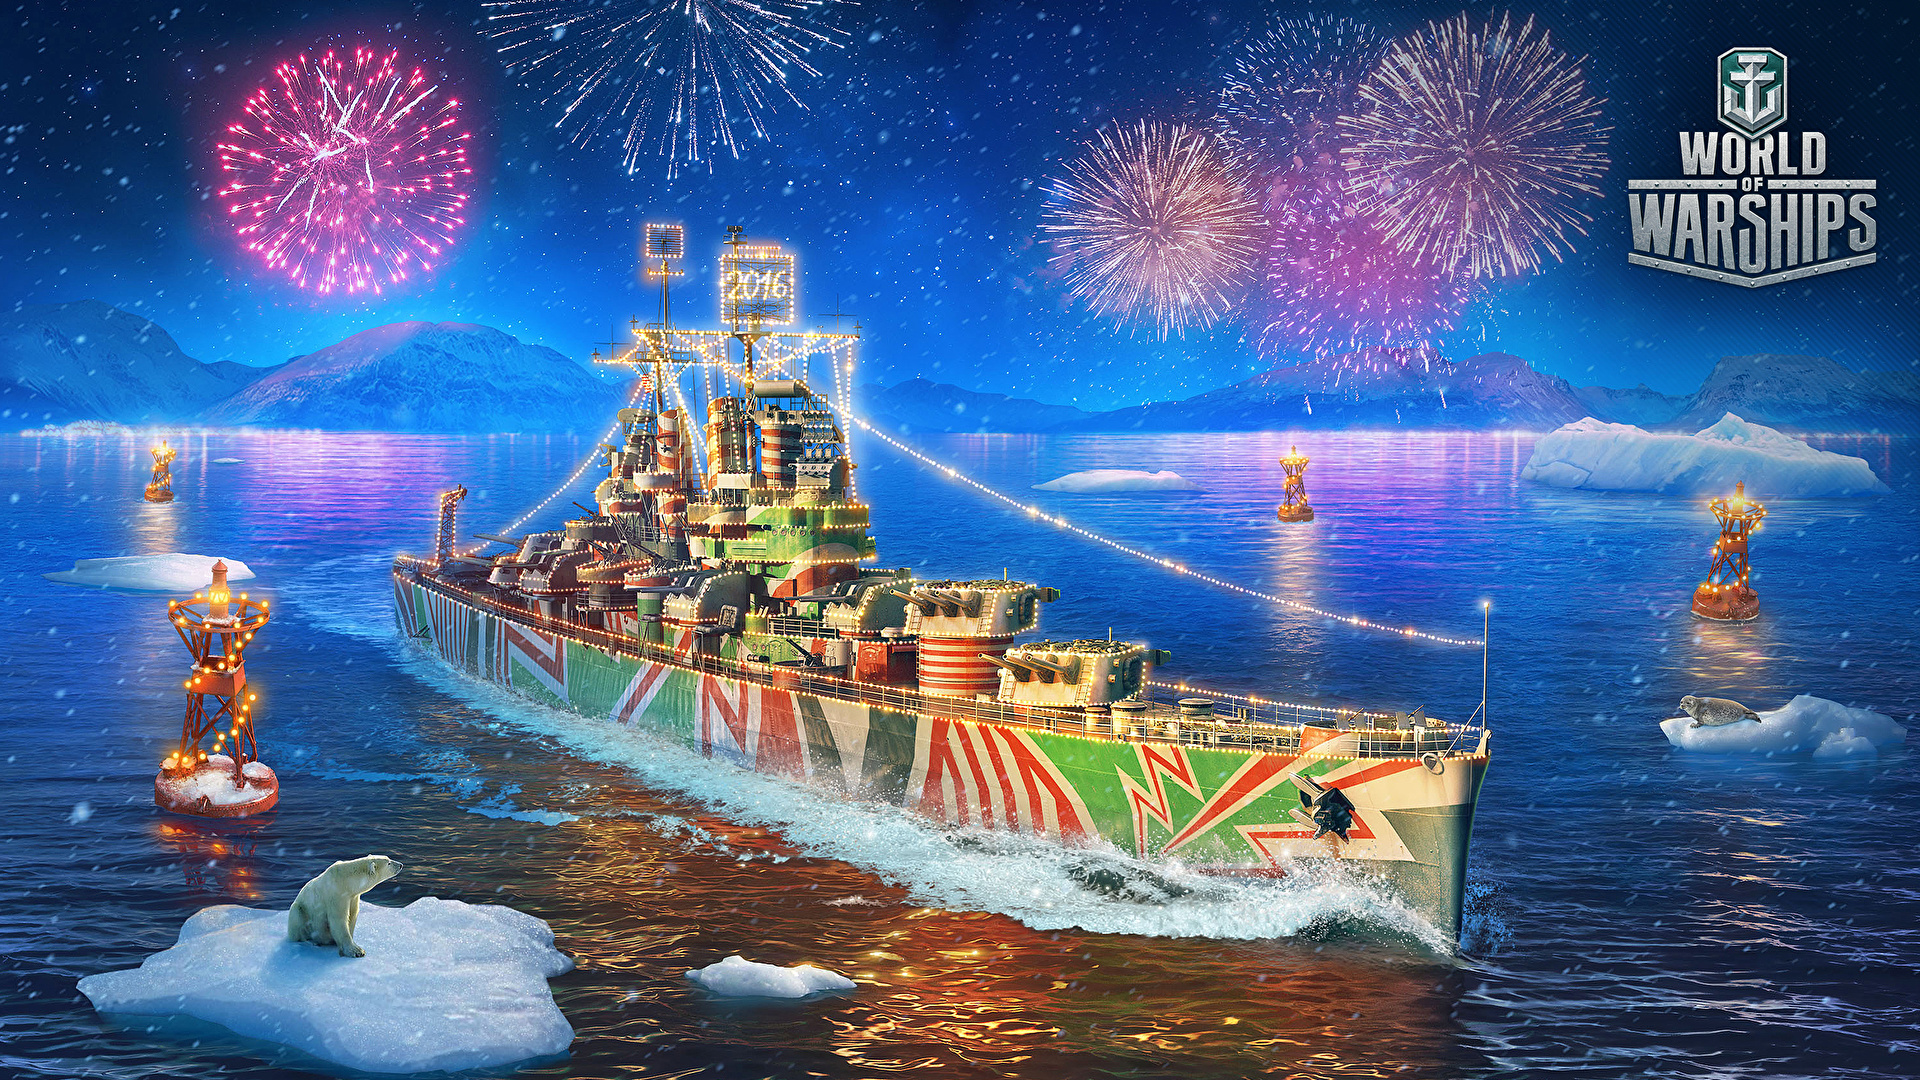 Wallpaper World of warships, video game, ship, celebrations